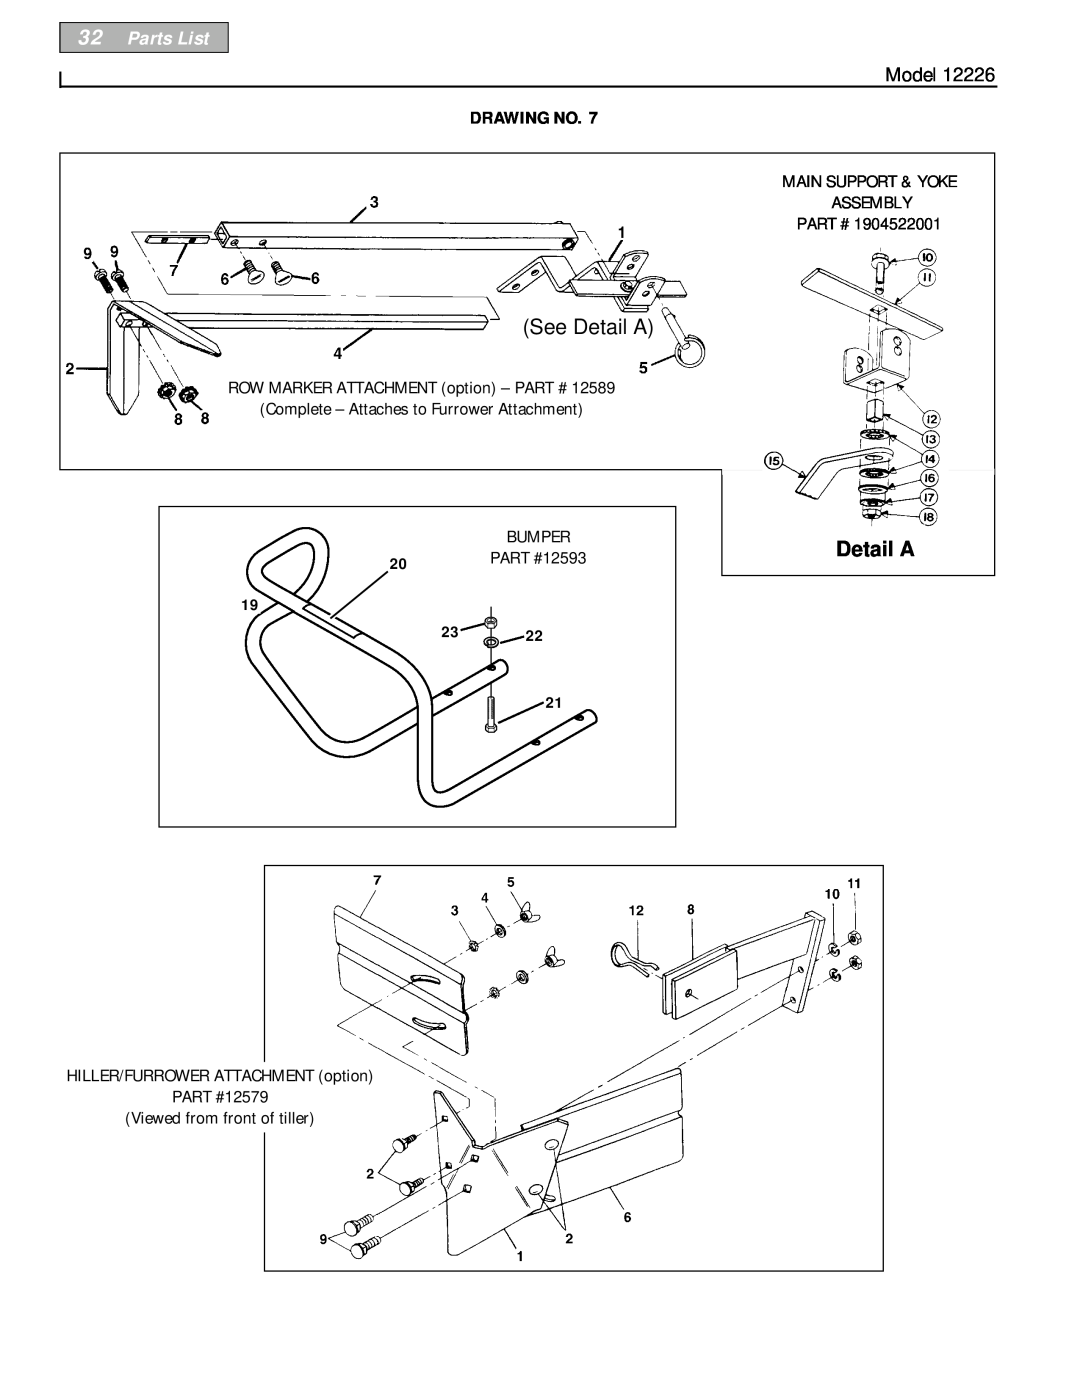 Bolens 12226 owner manual Parts List, See Detail A, Model, Drawing No 